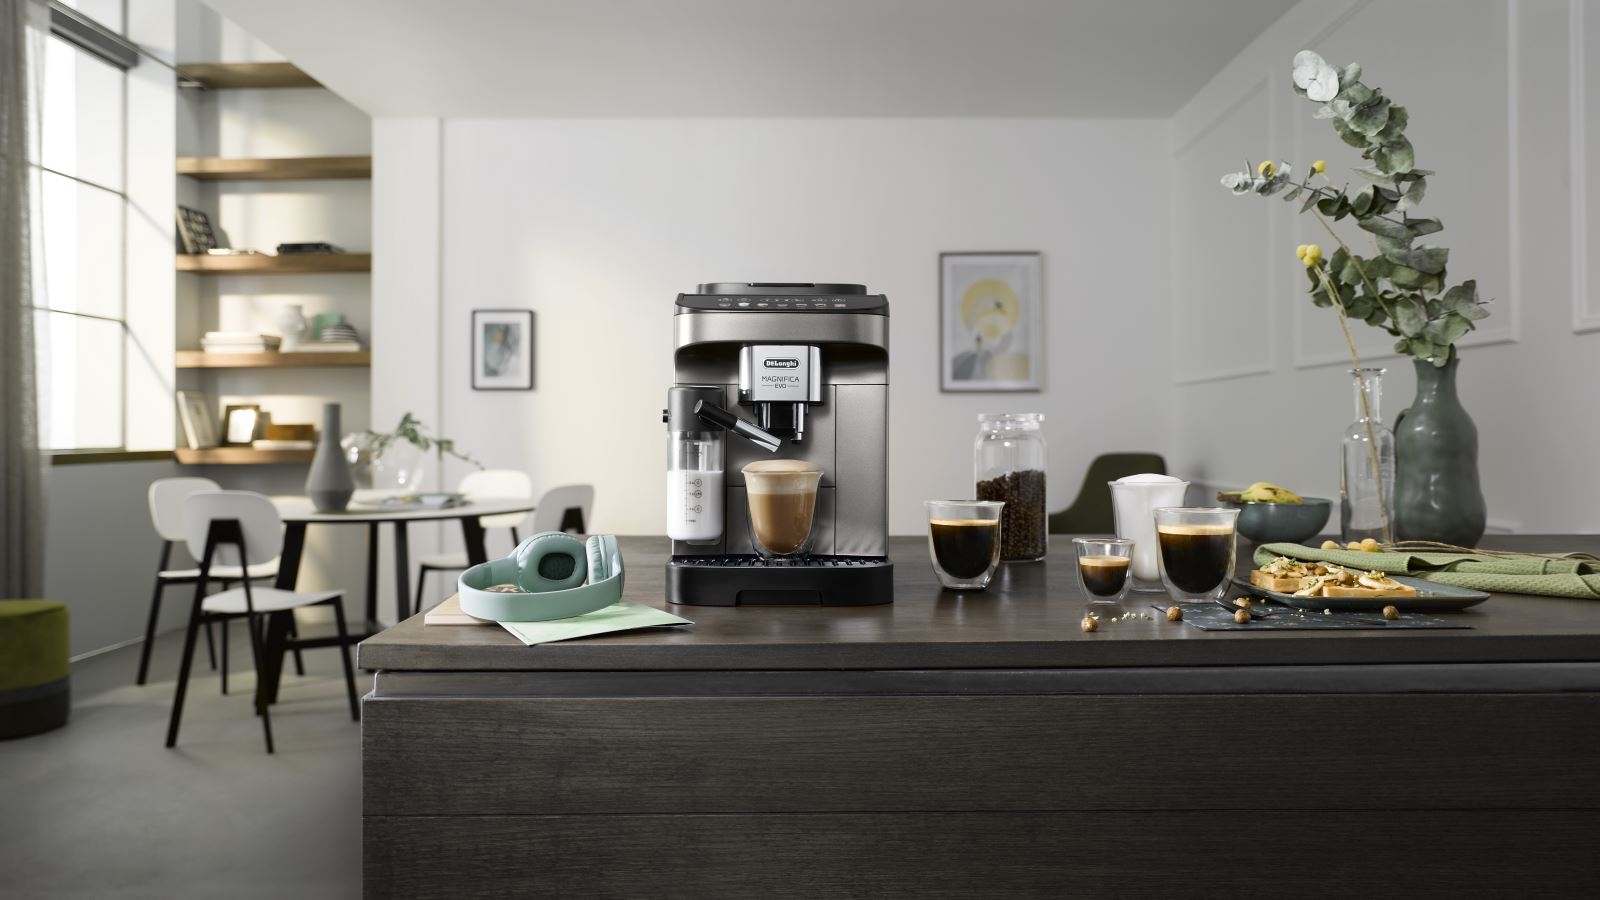 Delonghi Magnifica Start Fully Automatic Coffee Machine In Black  ECAM22021BG